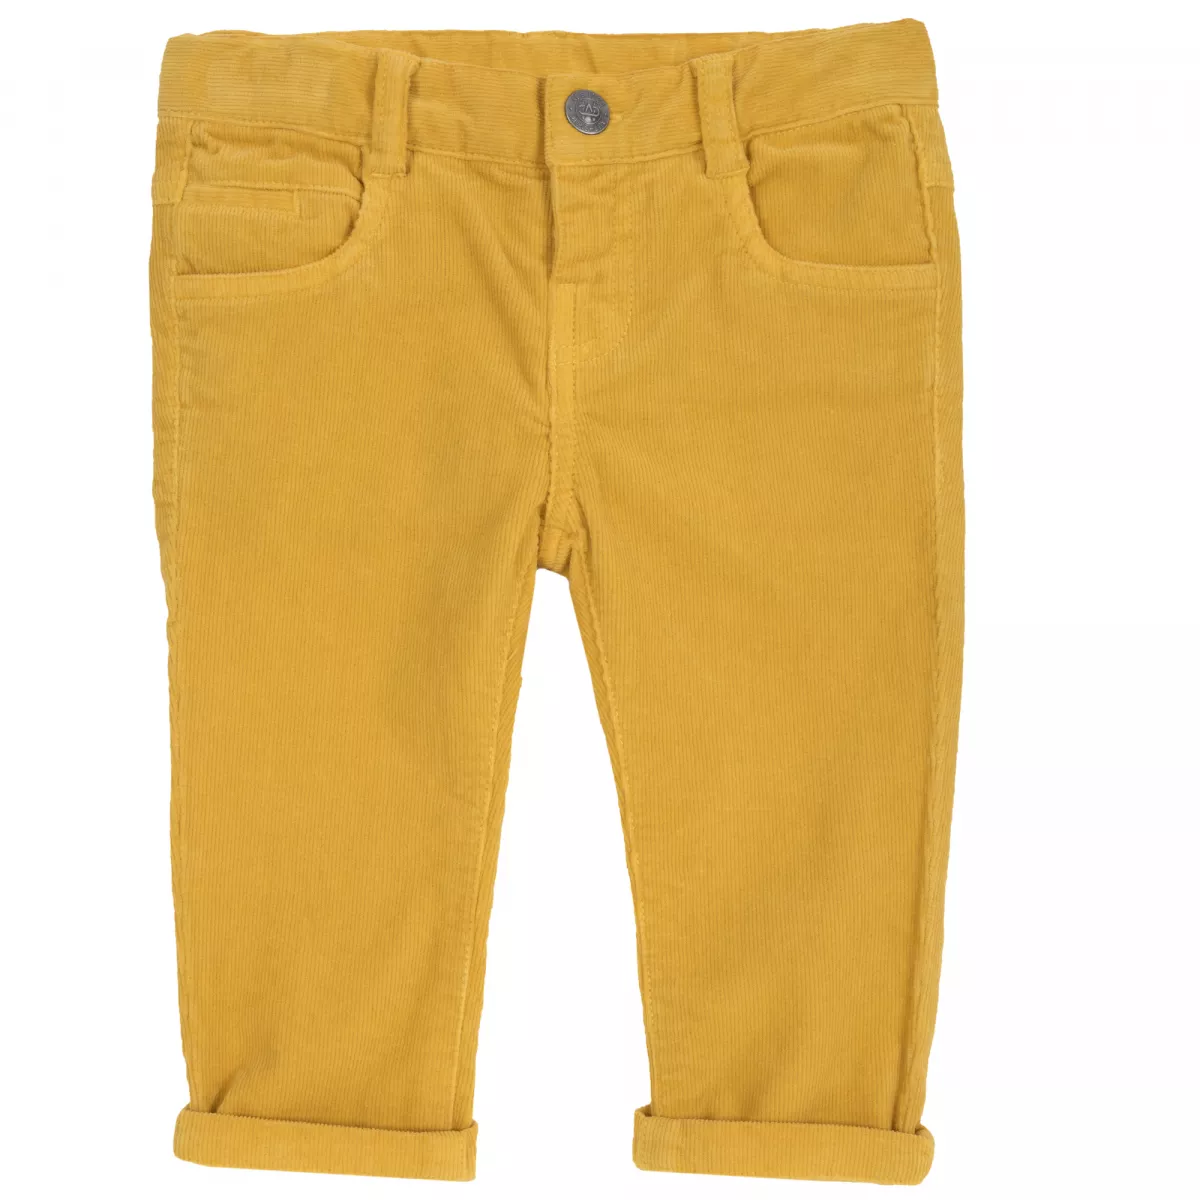 Pantalon copii Chicco, galben, 104